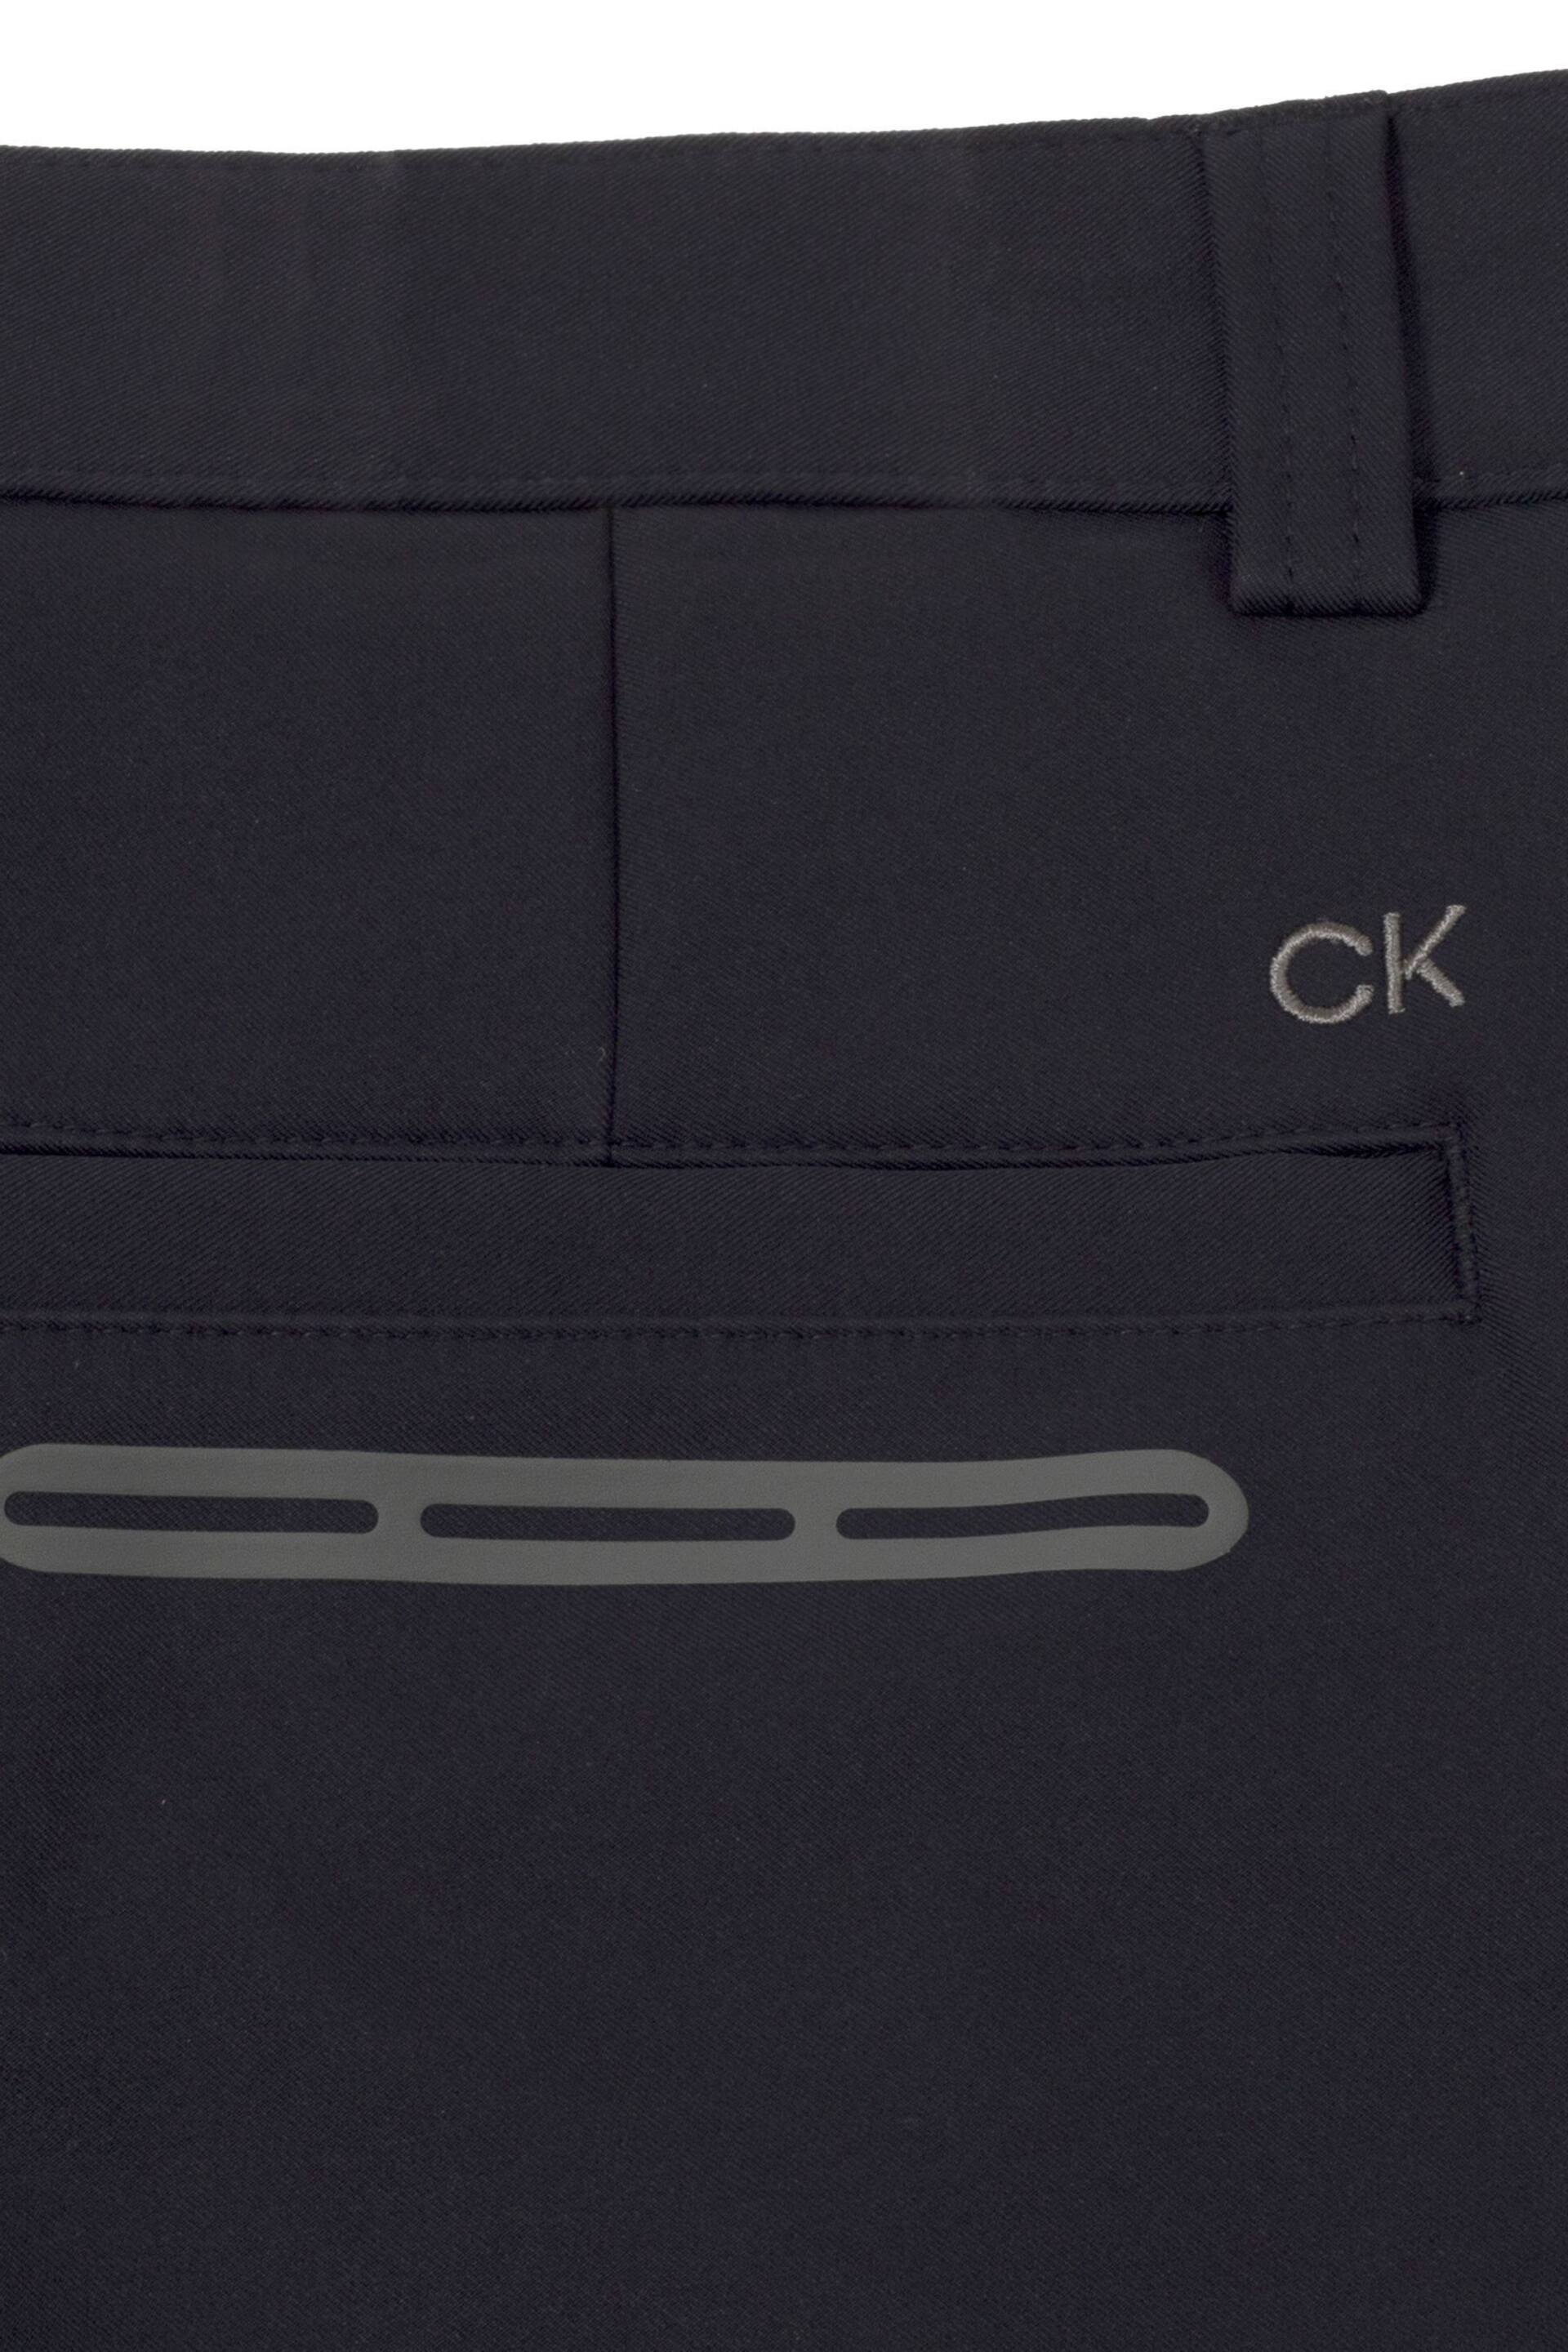 Calvin Klein Golf Black Regular Fit Tech Warm Trousers - Image 6 of 8